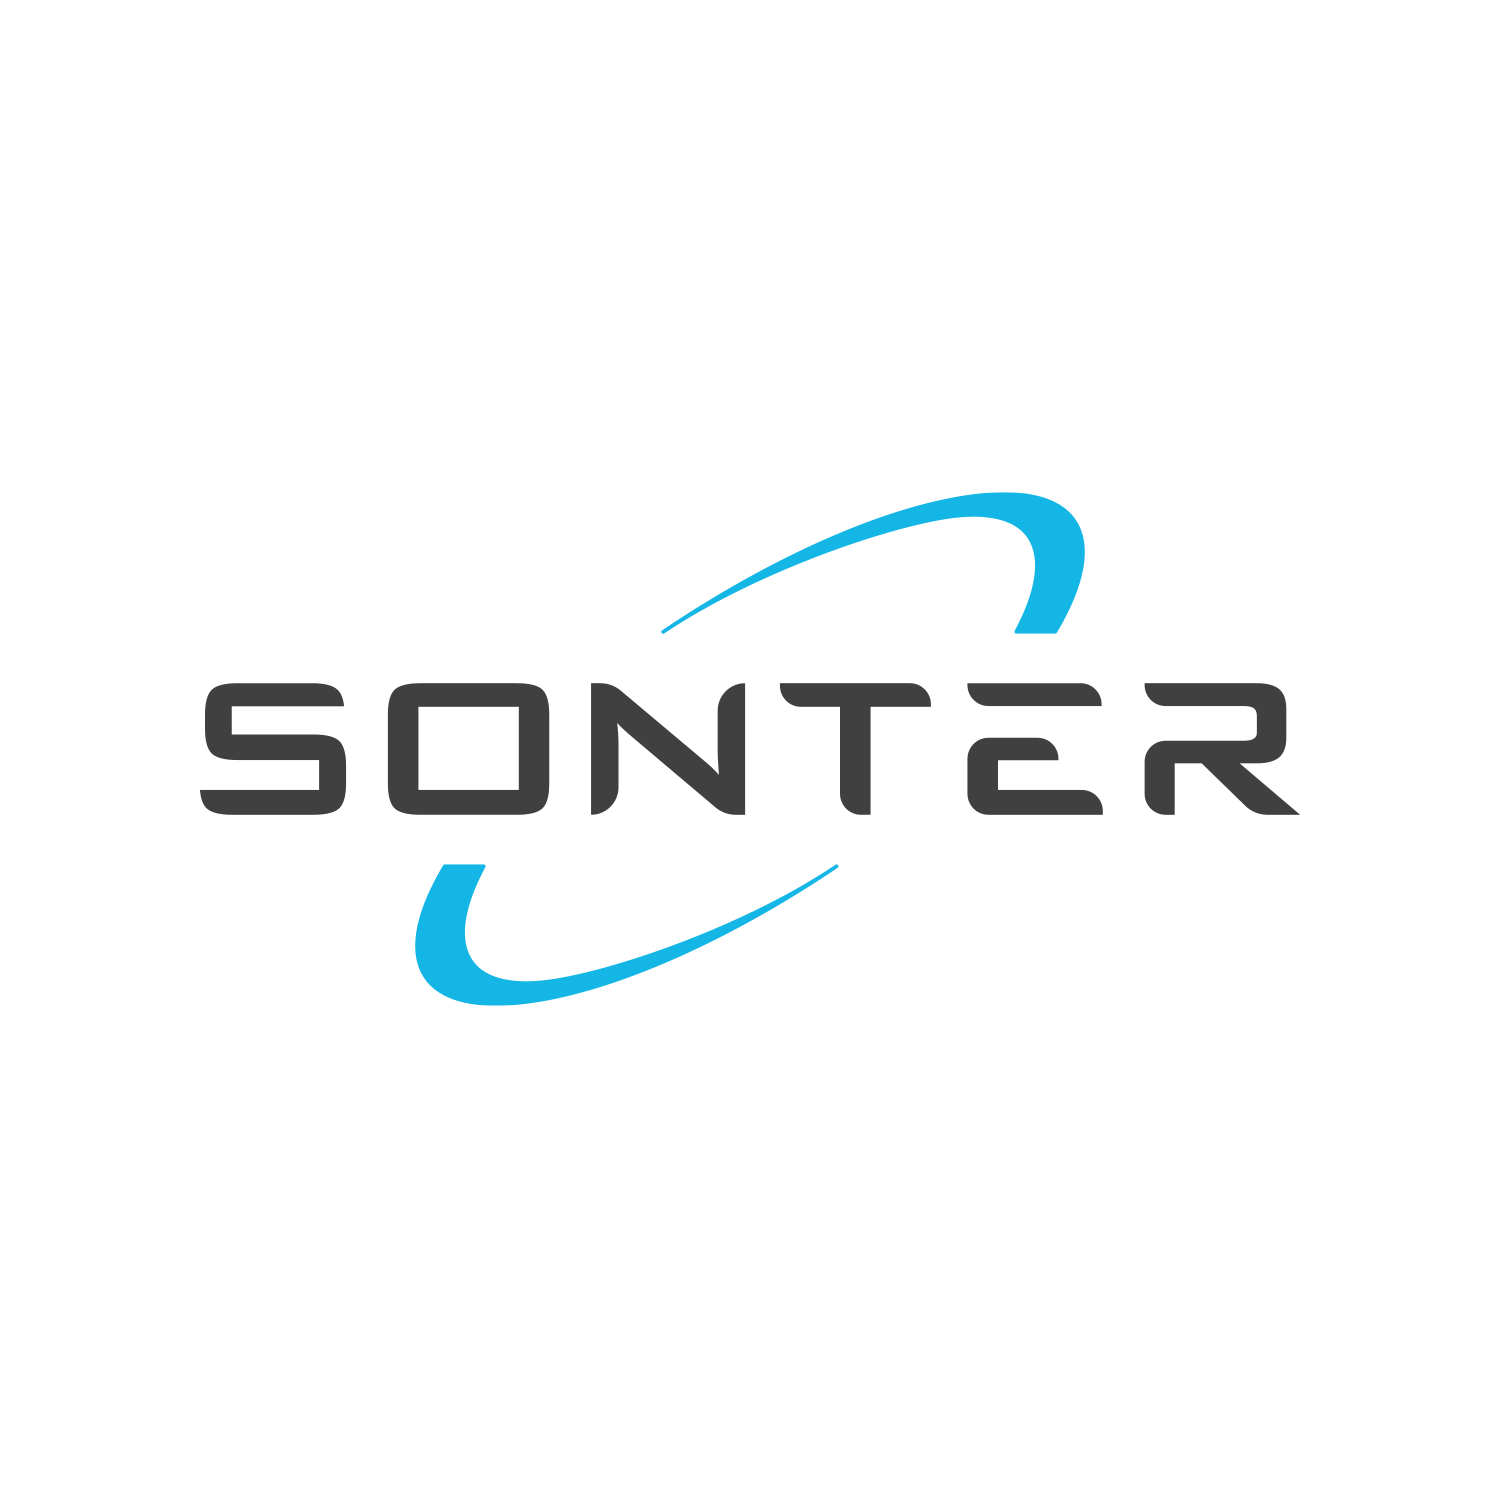 Sonter Technologies Logo Design - Windsor, CO Manufacturing Company